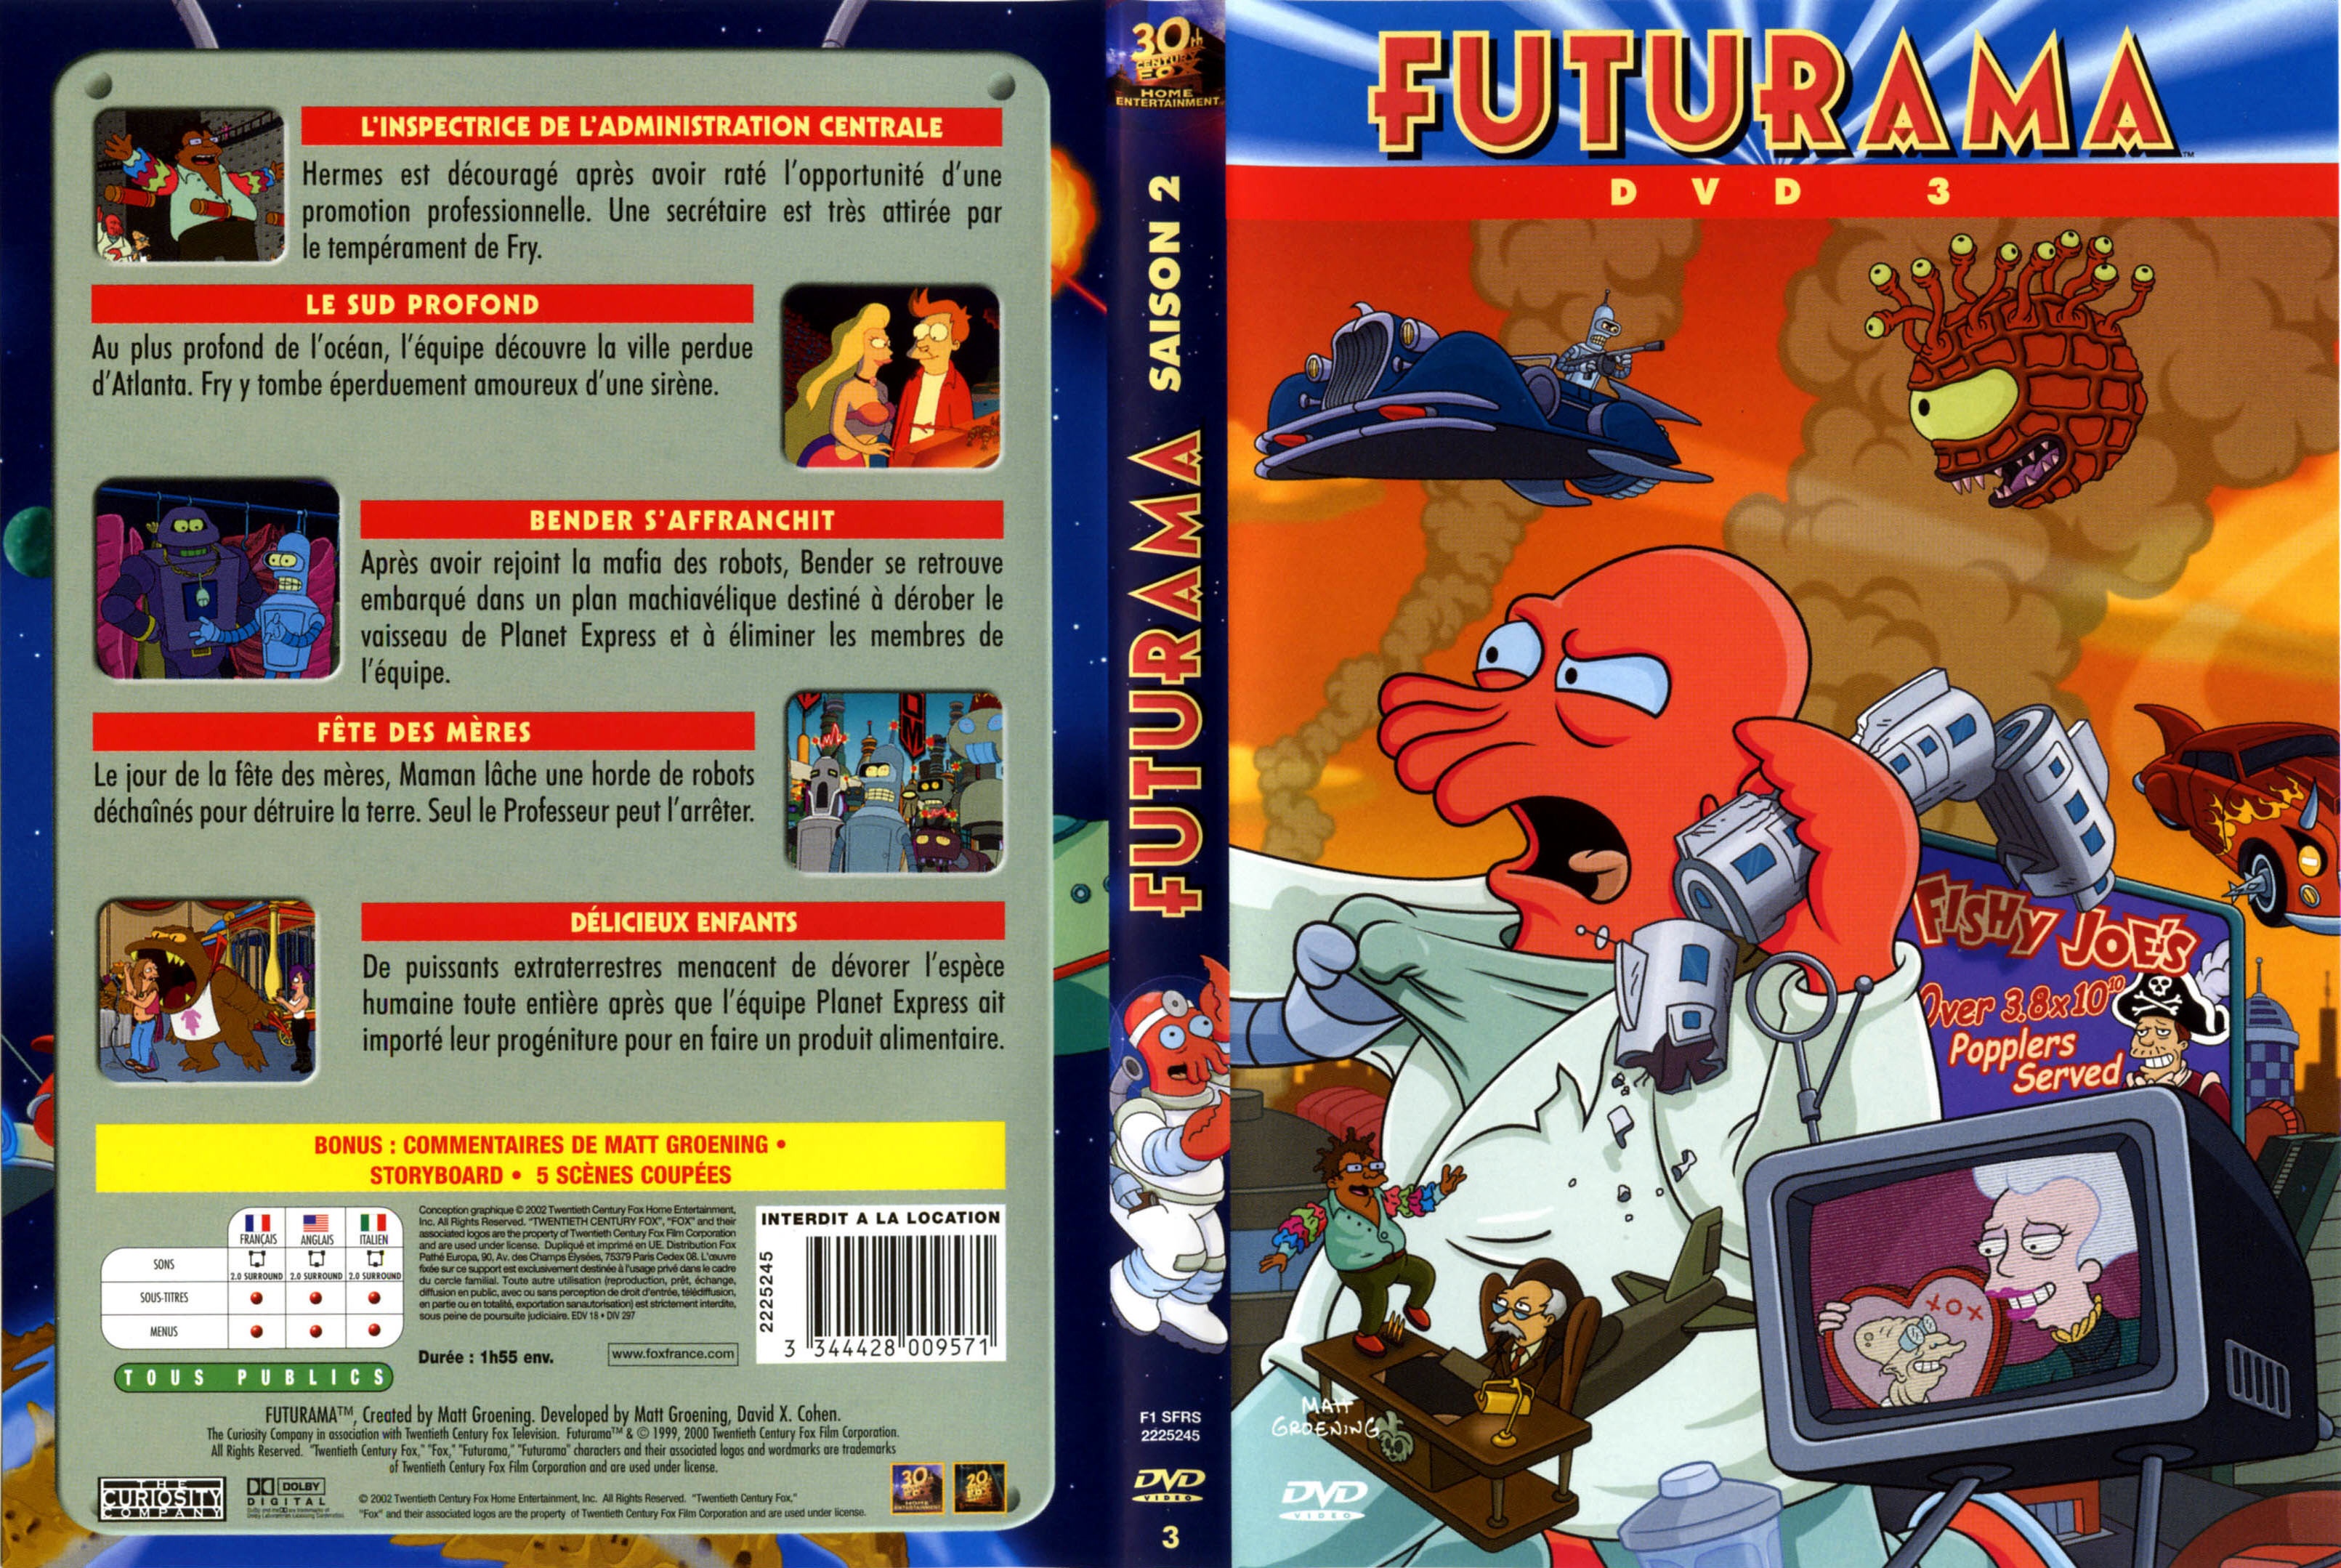 Jaquette DVD Futurama saison 2 DVD 3